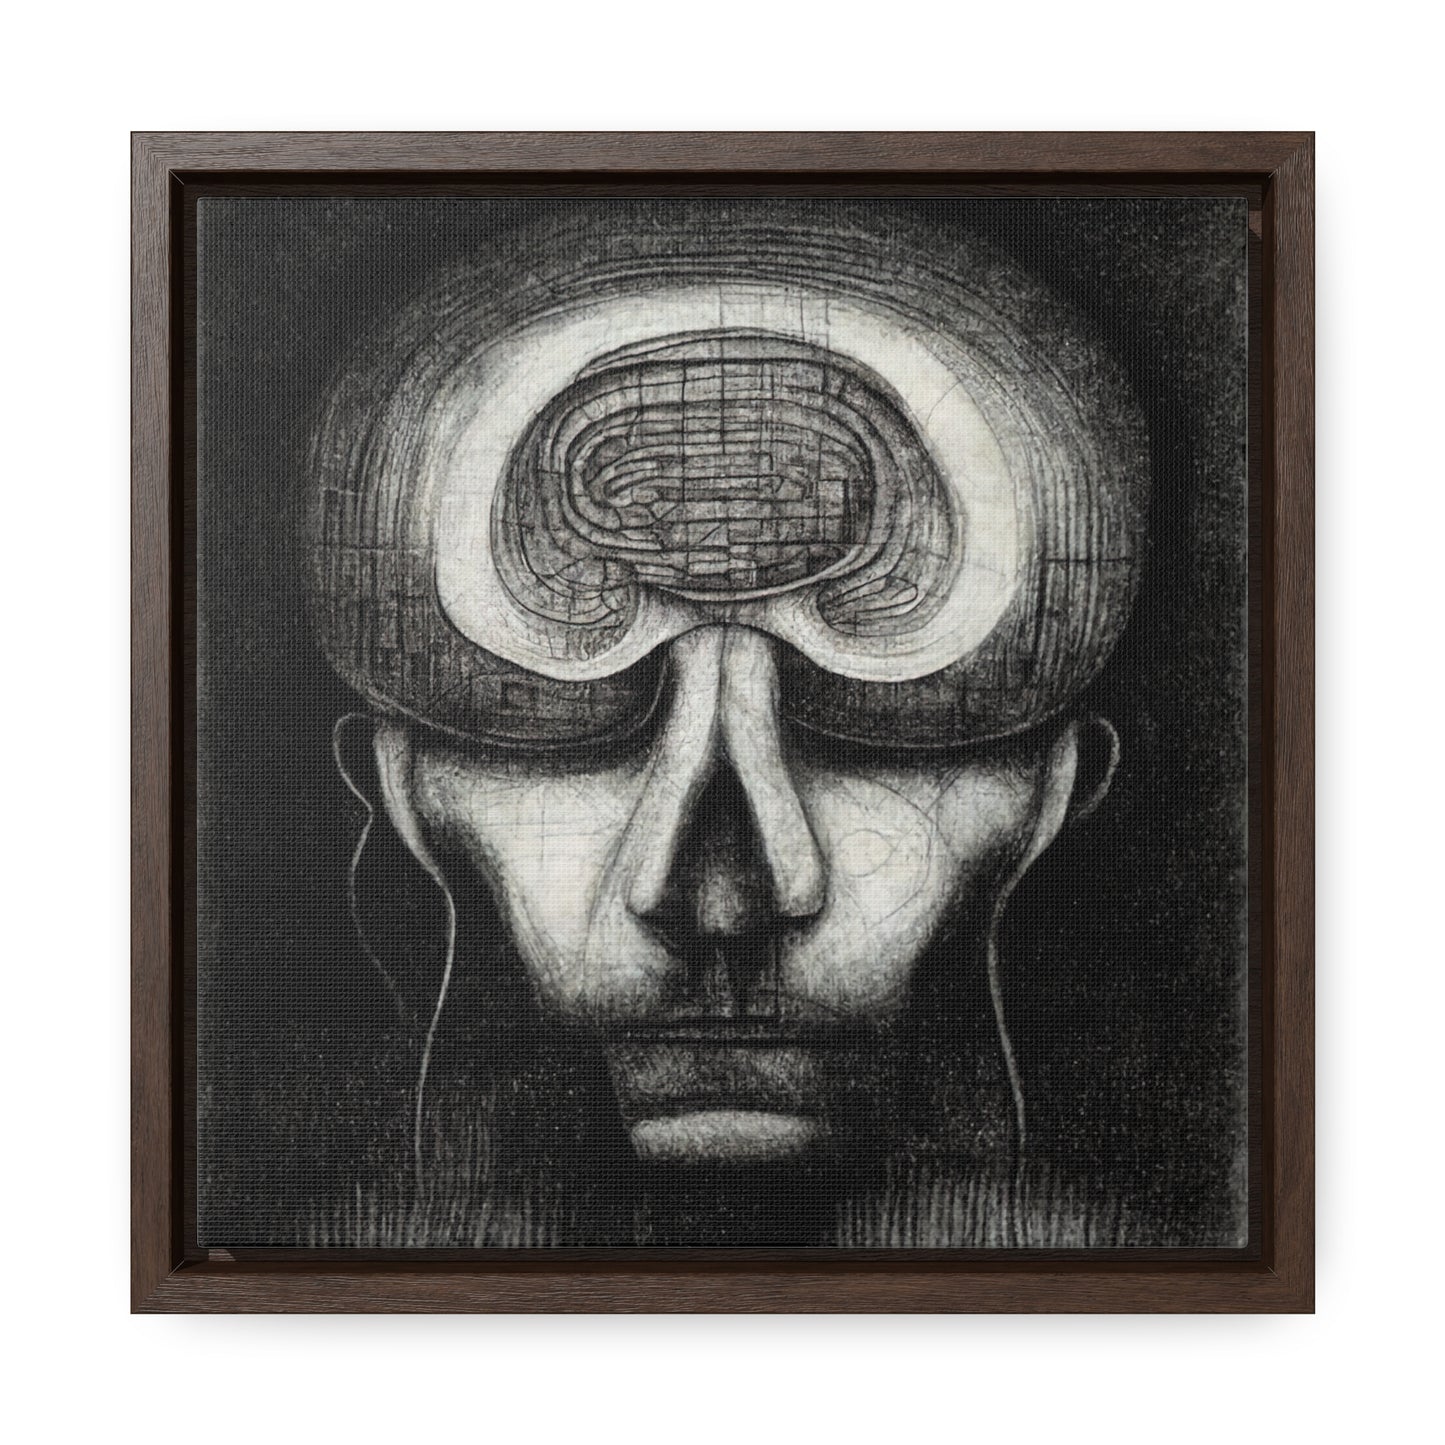 Brain 57, Valentinii, Gallery Canvas Wraps, Square Frame